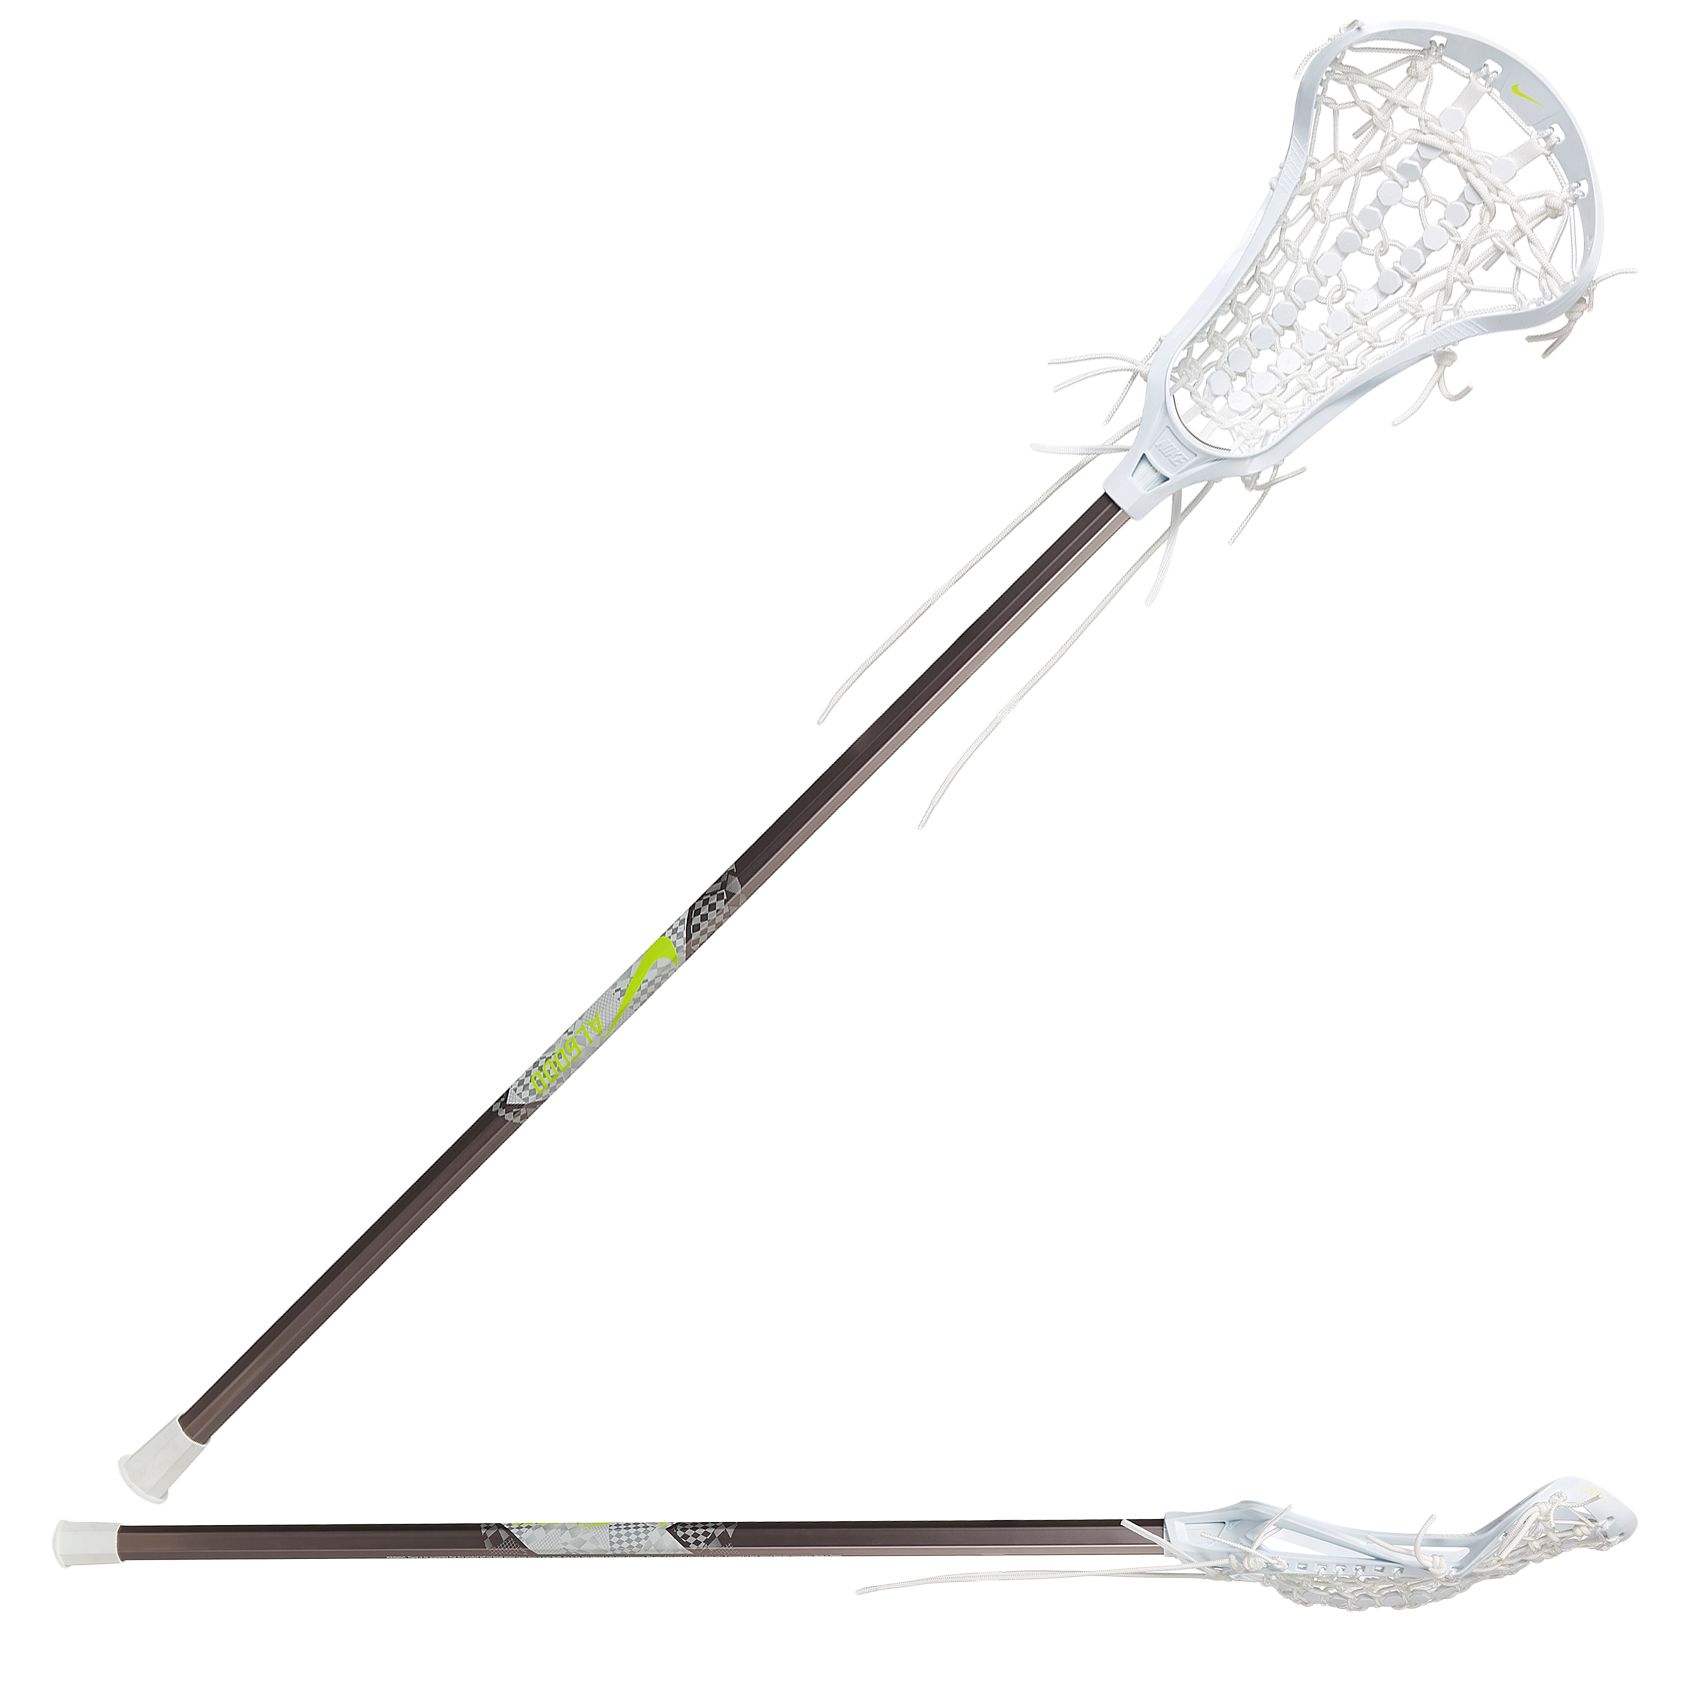 nike lunar 2 lacrosse stick